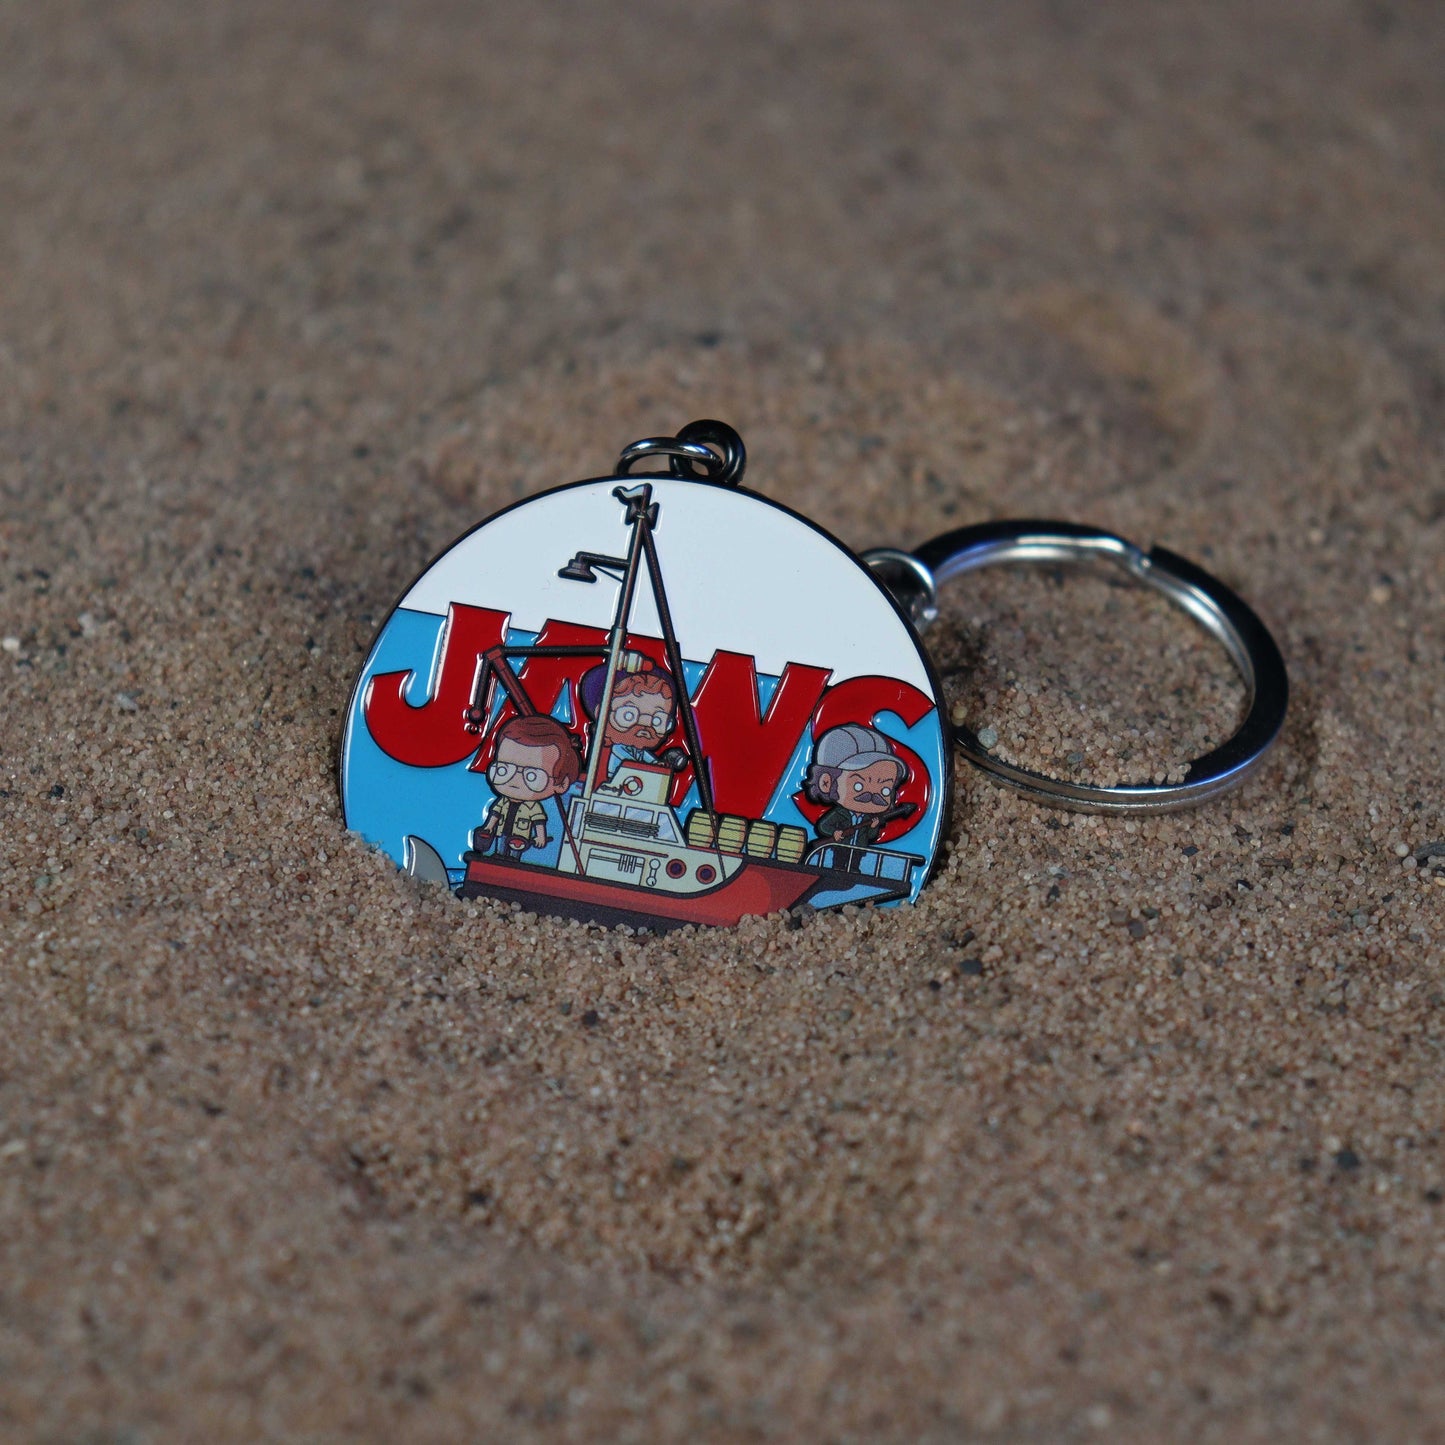 Jaws Limited Edition Chibi Key Ring